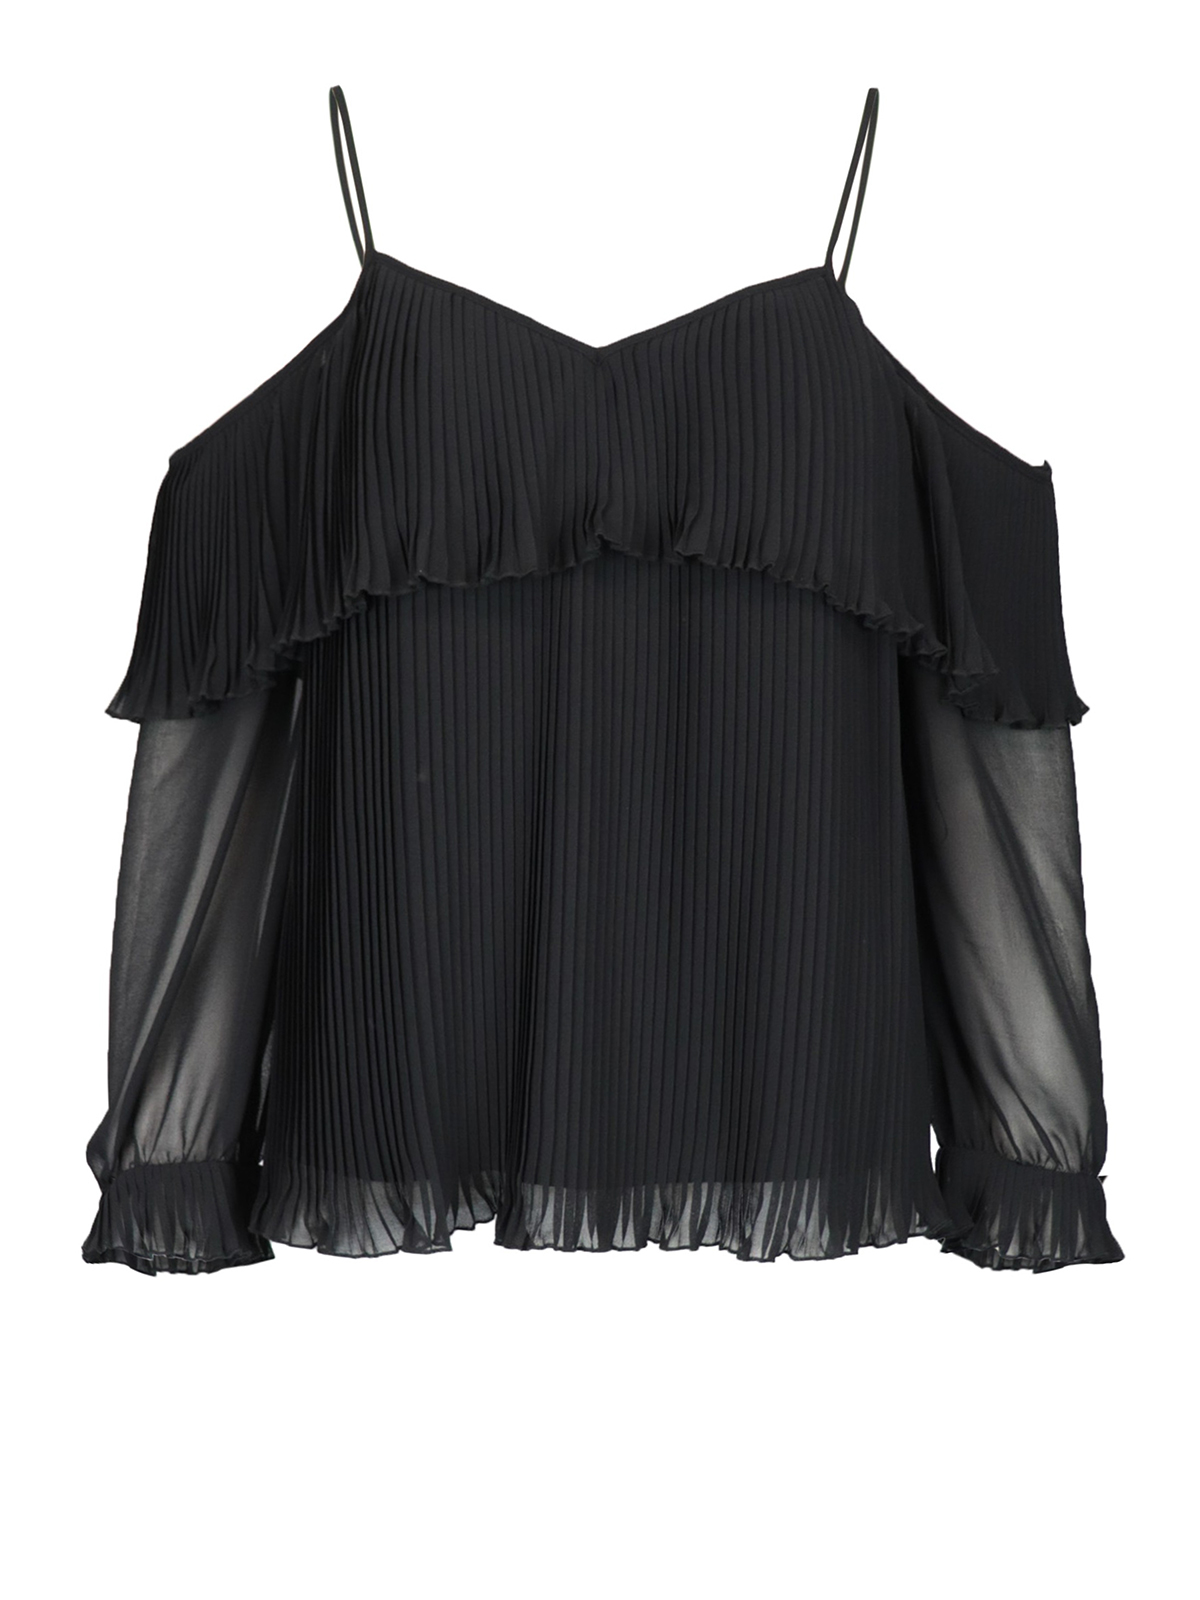 Blouses Twinset - Black pleated georgette blouse - 201TT209000006